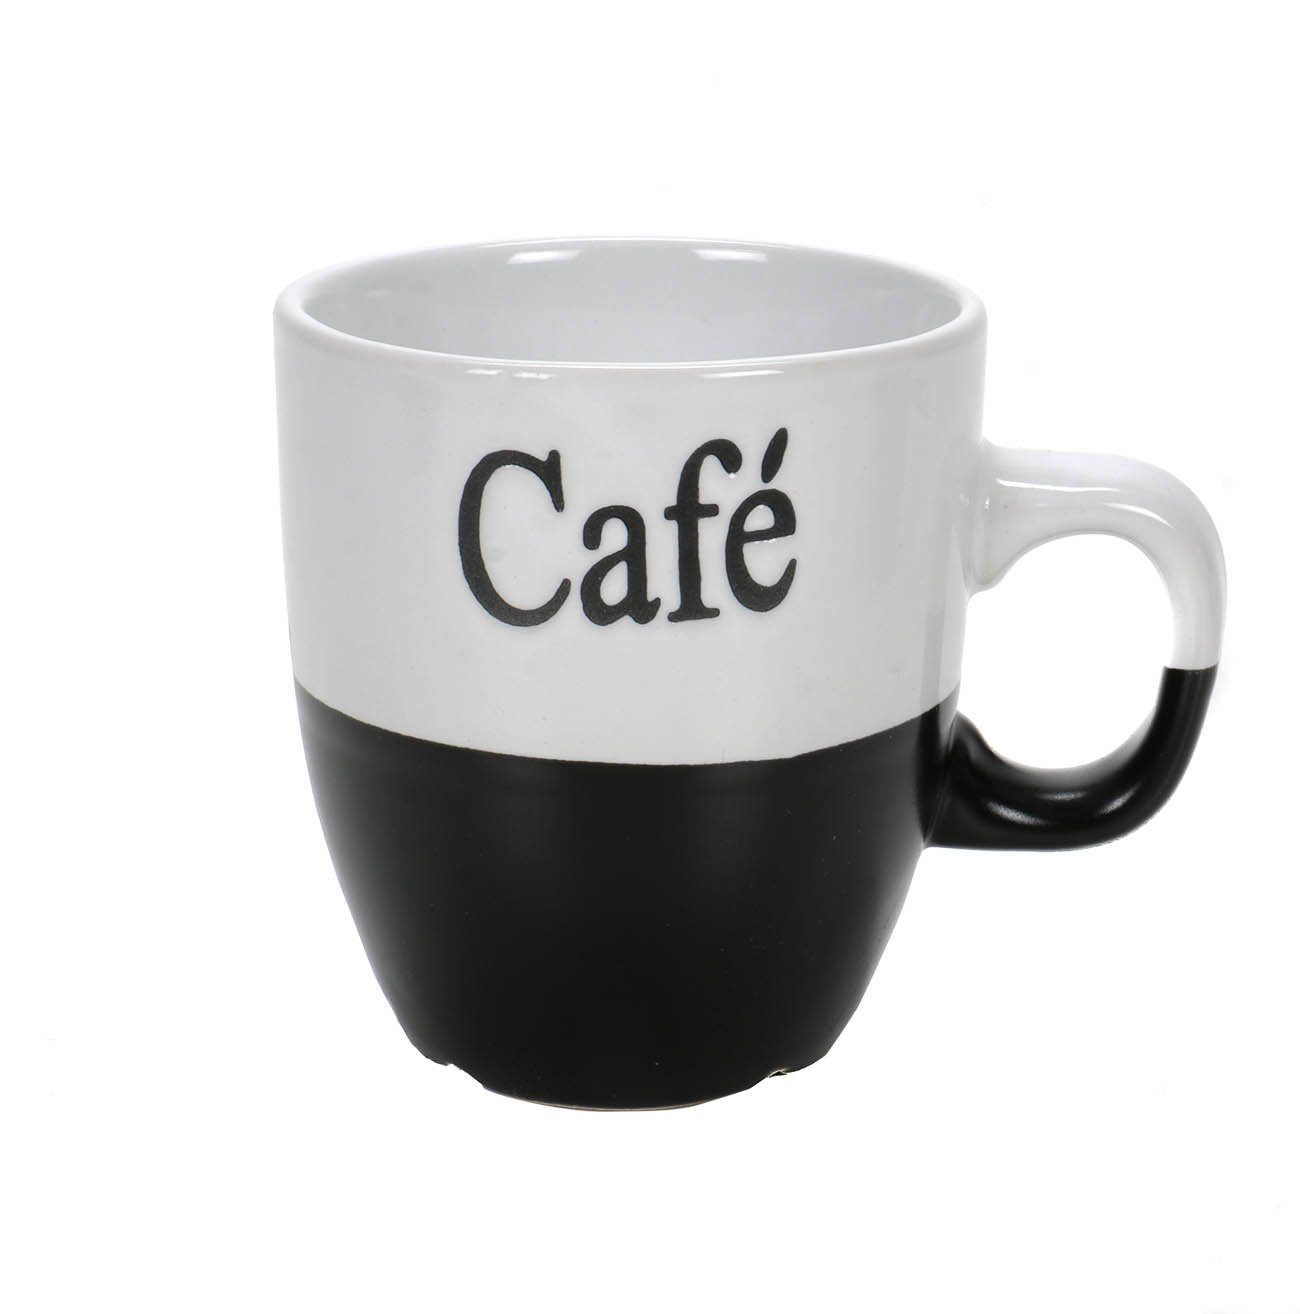 Cappuccinotasse Espressotasse, Aufschrift Kaffeetasse, Set Keramik, 2-er Aufschrift für Keramik-Tassen Café Bubble-Store schwarz/weiß Café Kaffeetassen, Espresso, mit